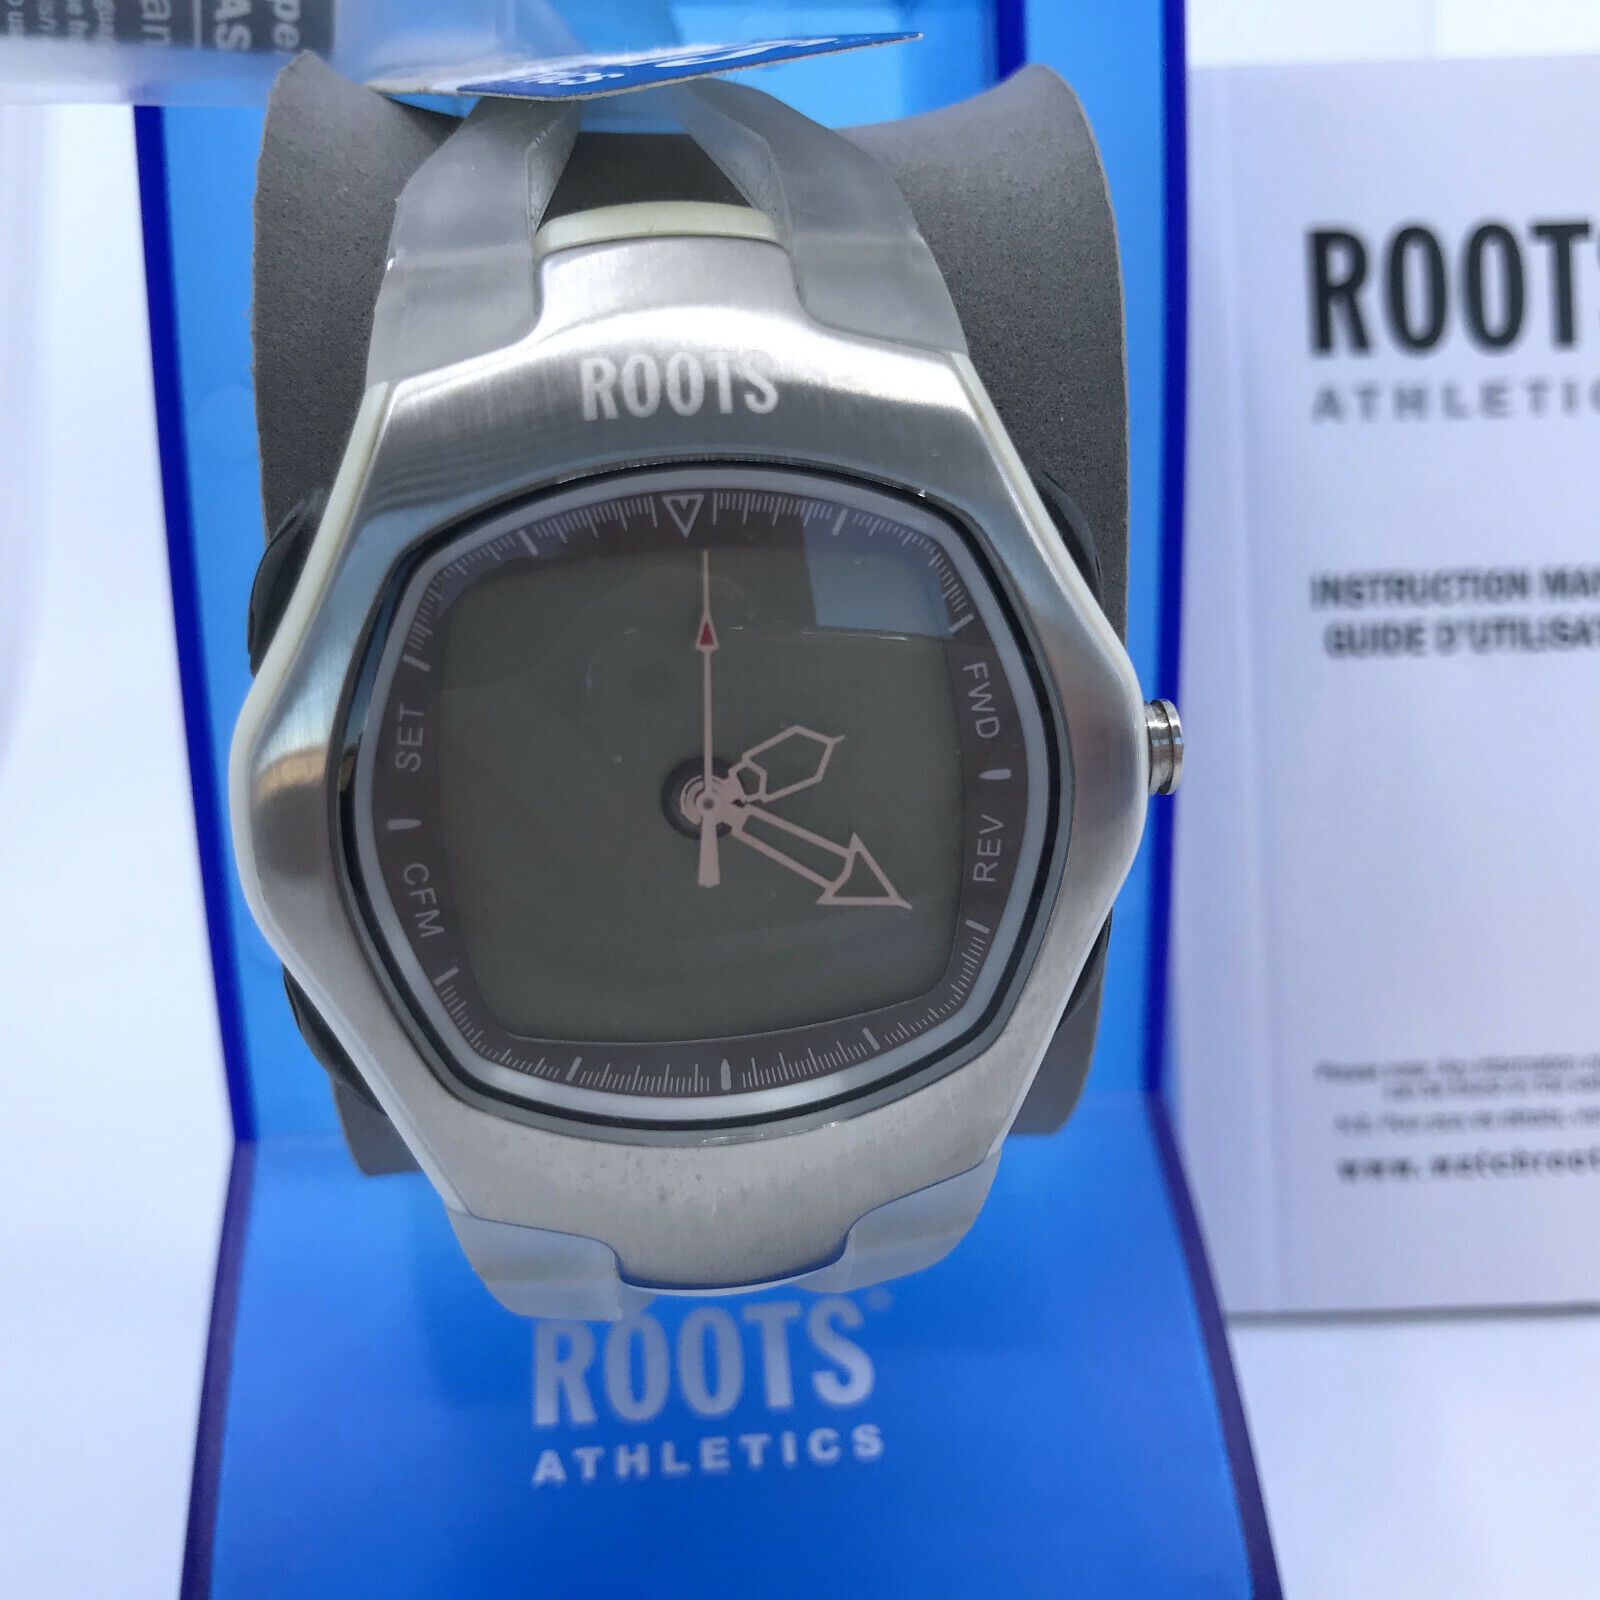 Roots Athletics Wrist Watch NEW RY2076 Passport Silicone Strap Box needs battery